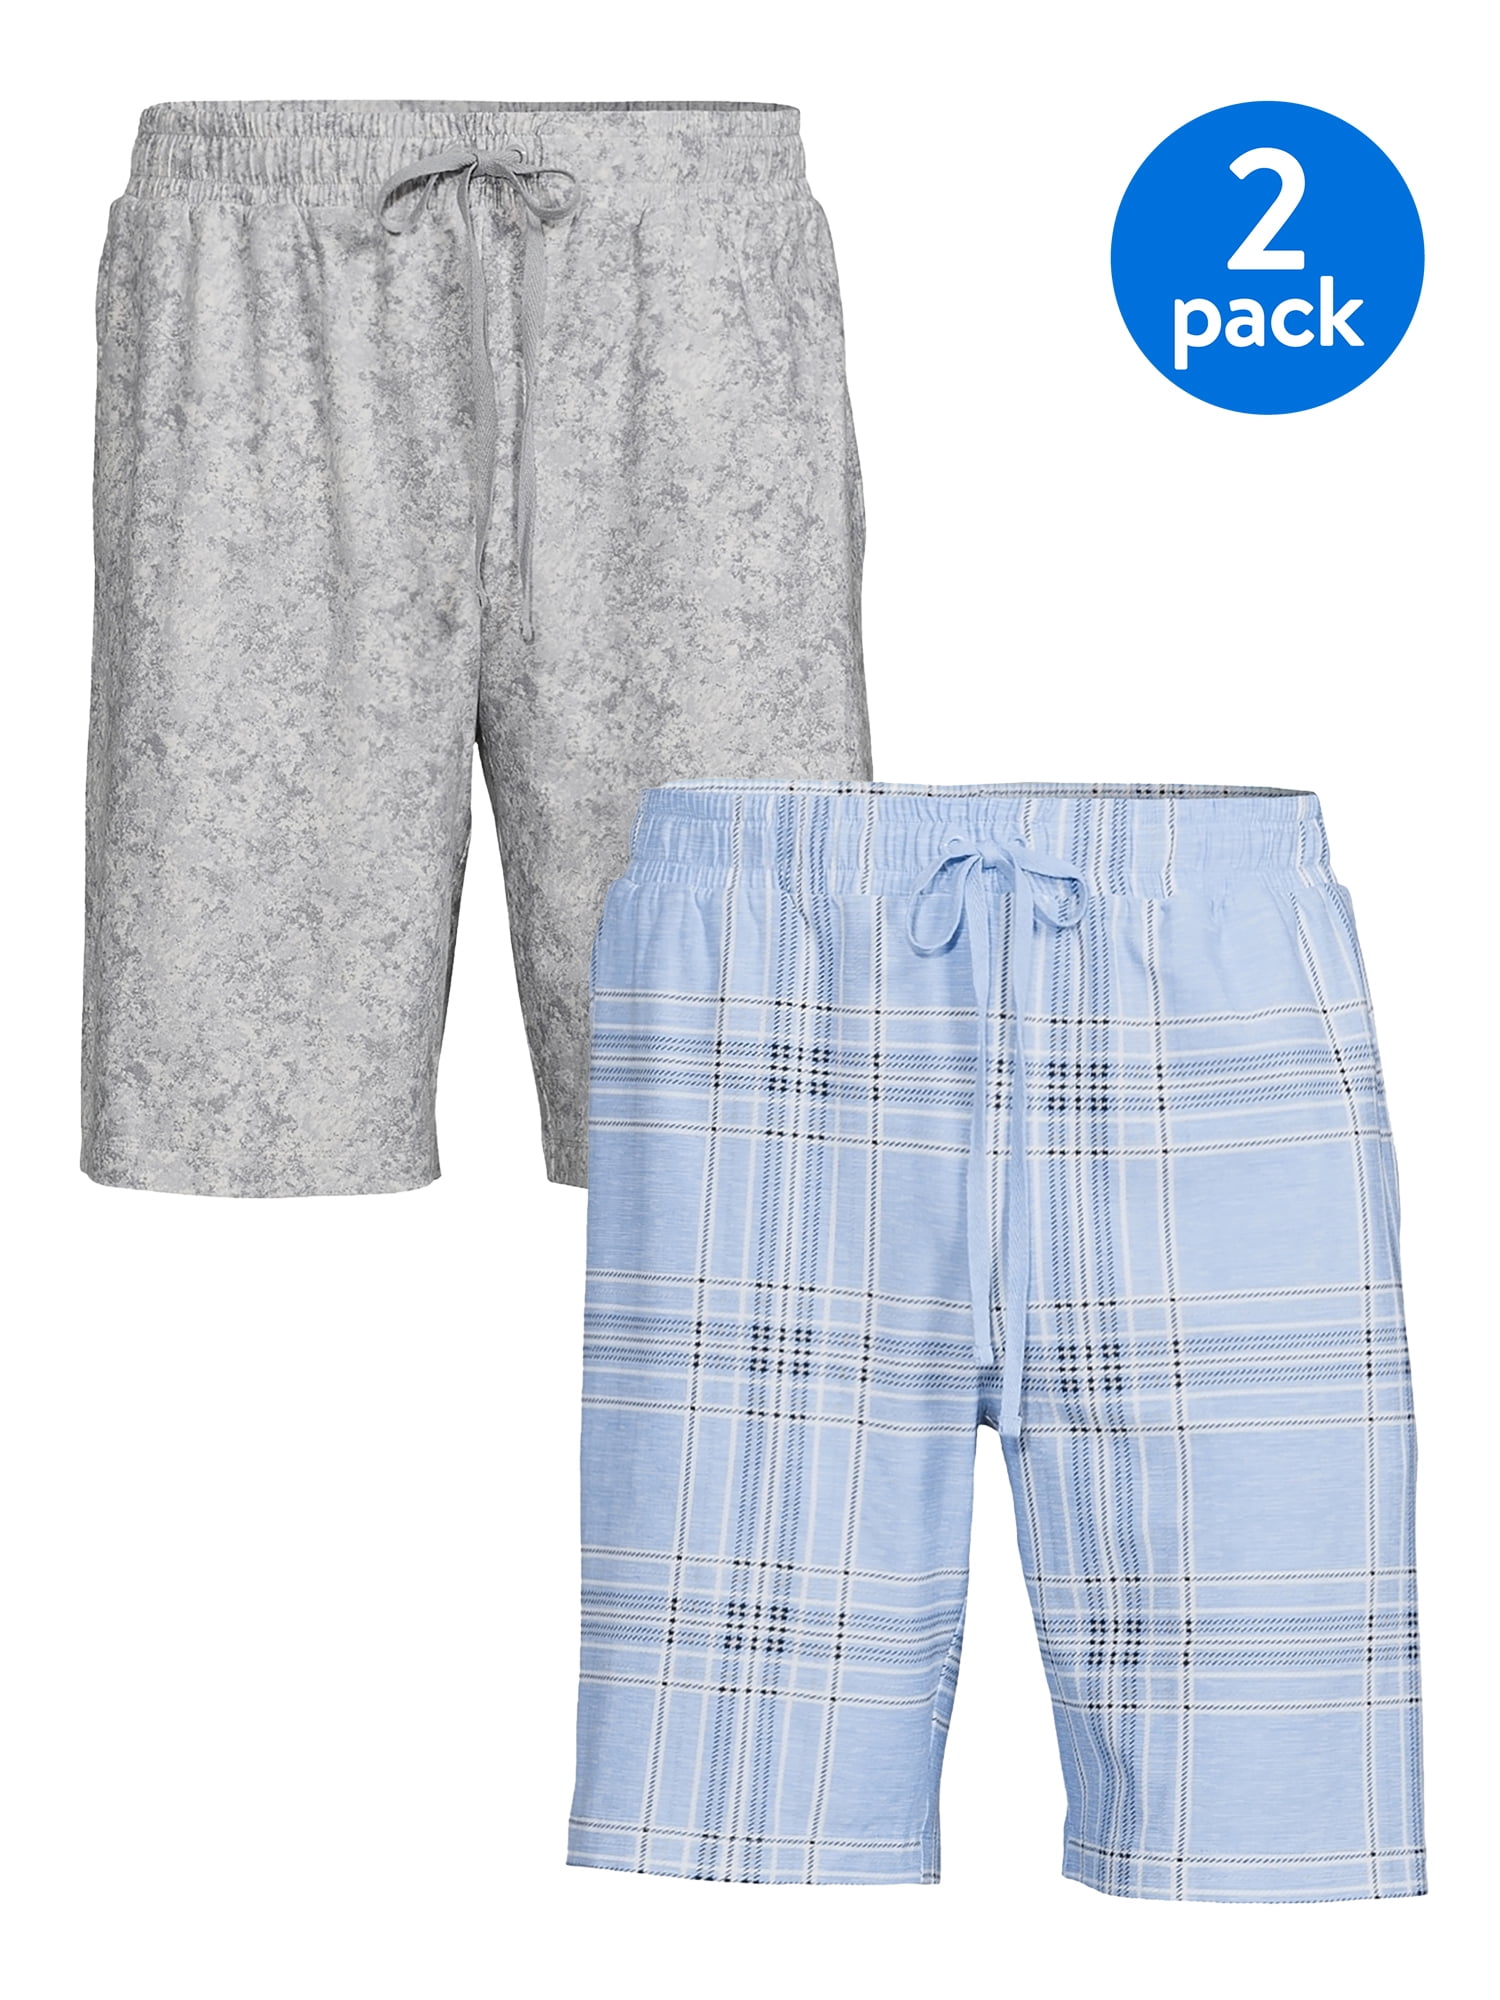 Mens  2 Pack Checked Lounge Pyjama Sleep Shorts Blue/Red Check Nightwear Foxbury 